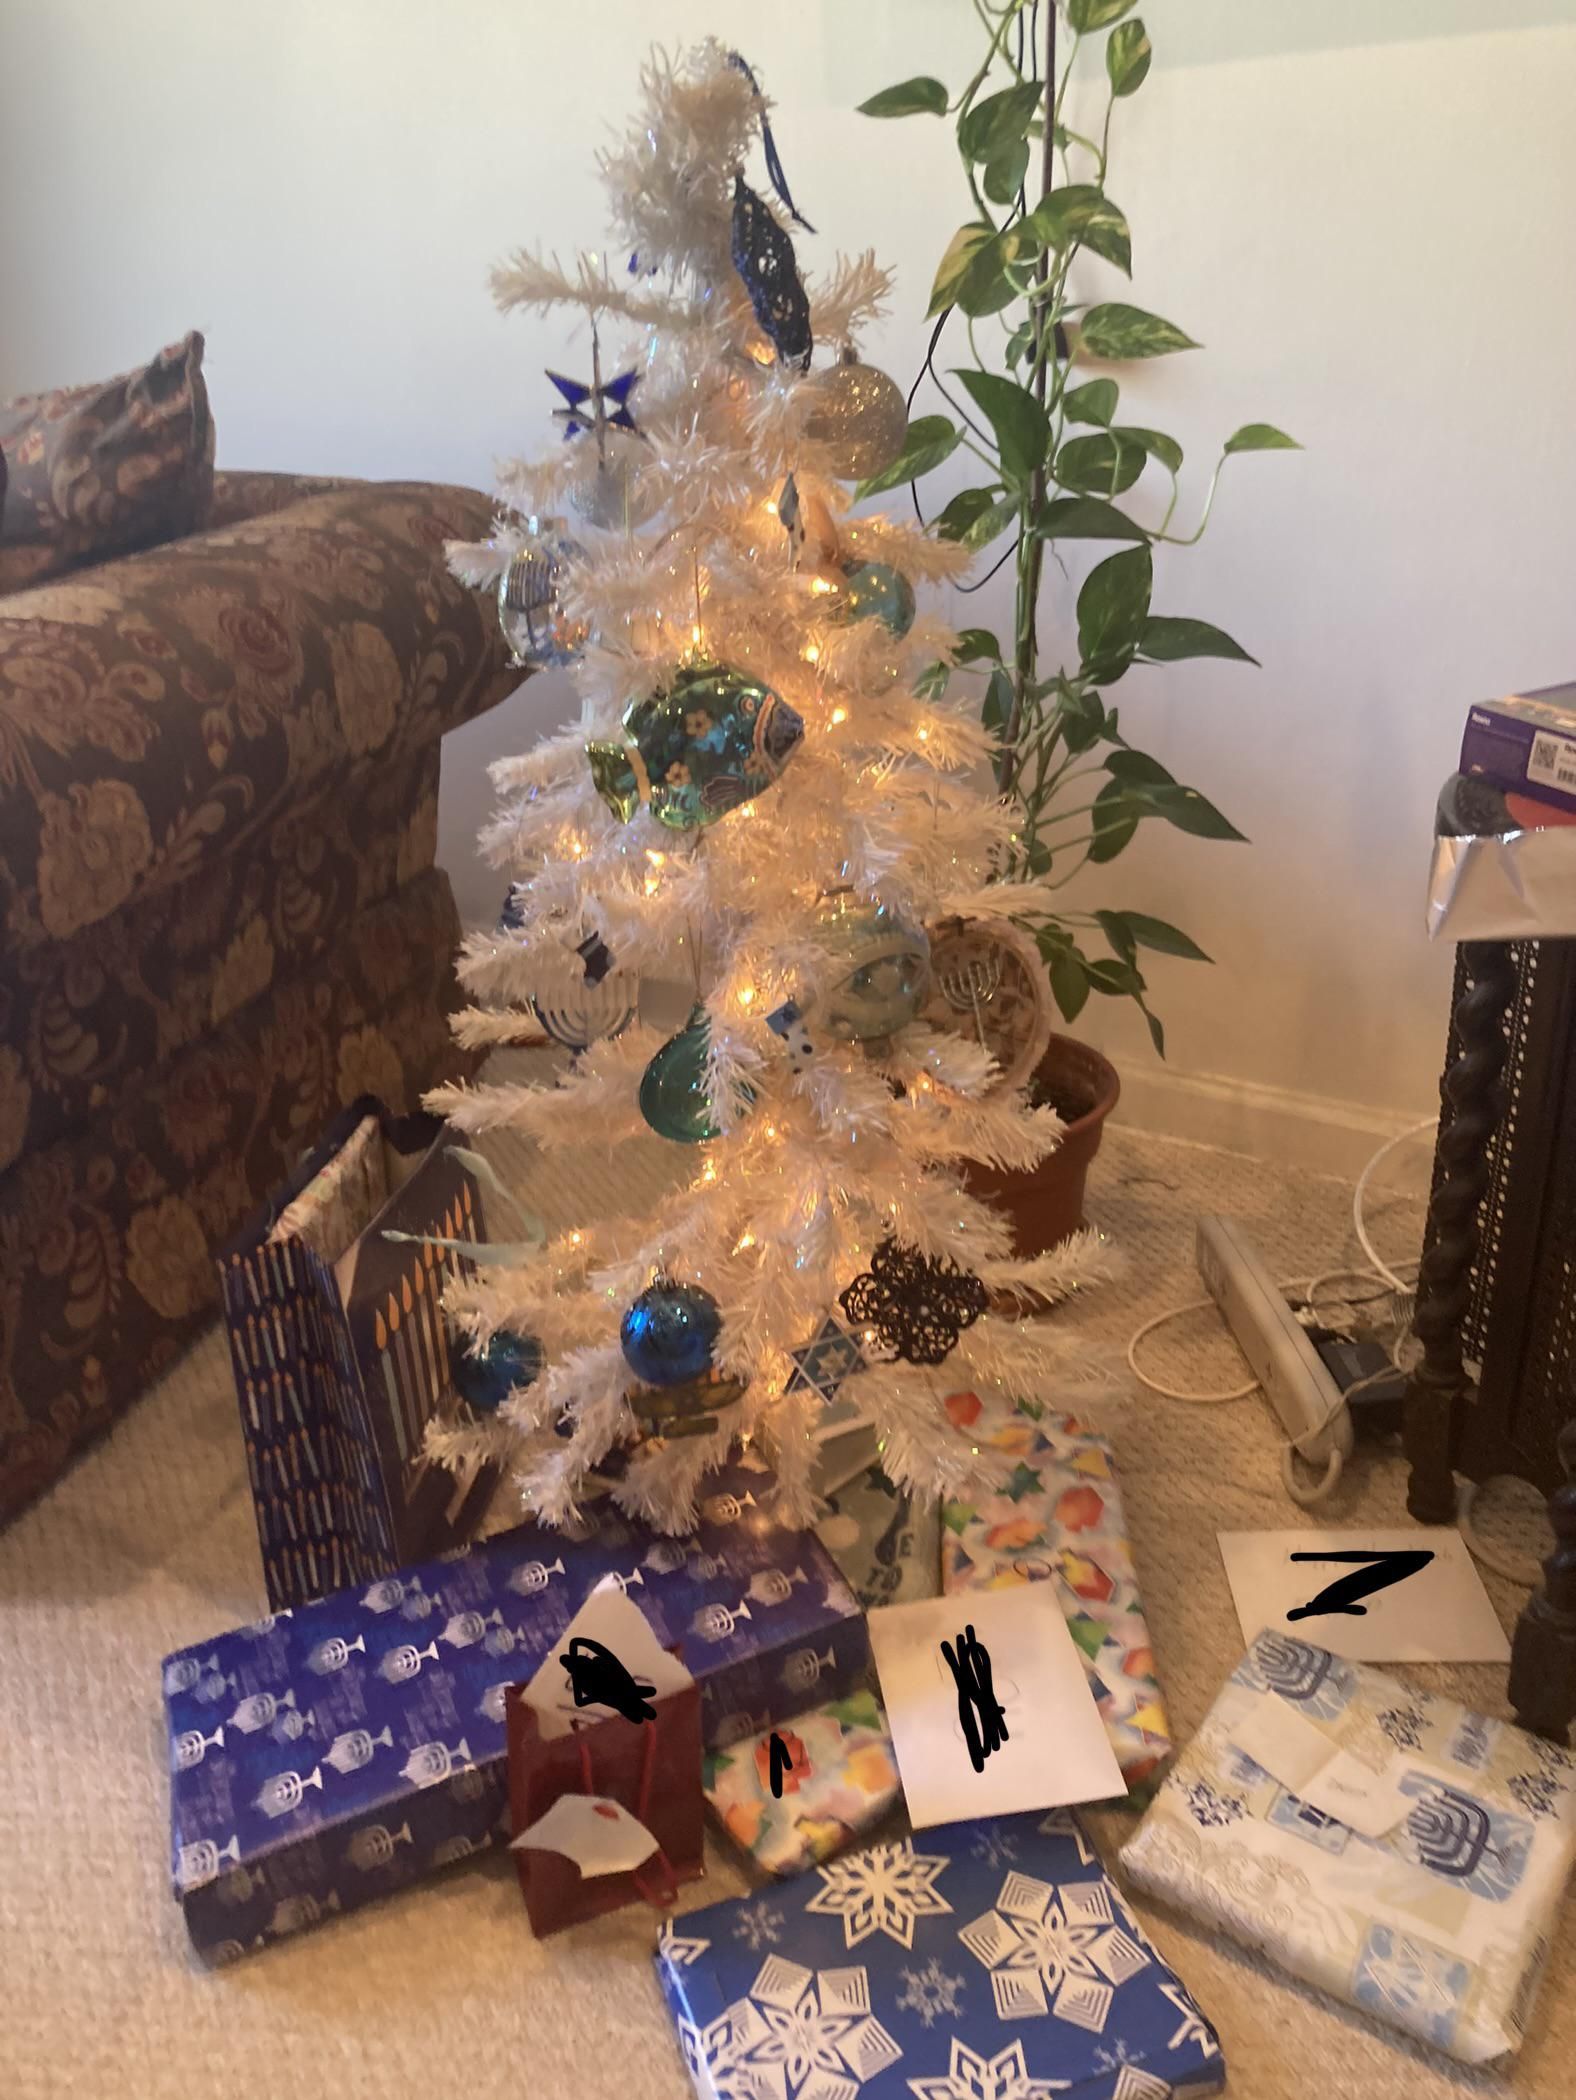 My family Jewish, so instead of getting a Christmas tree we got a Hanukkah bush